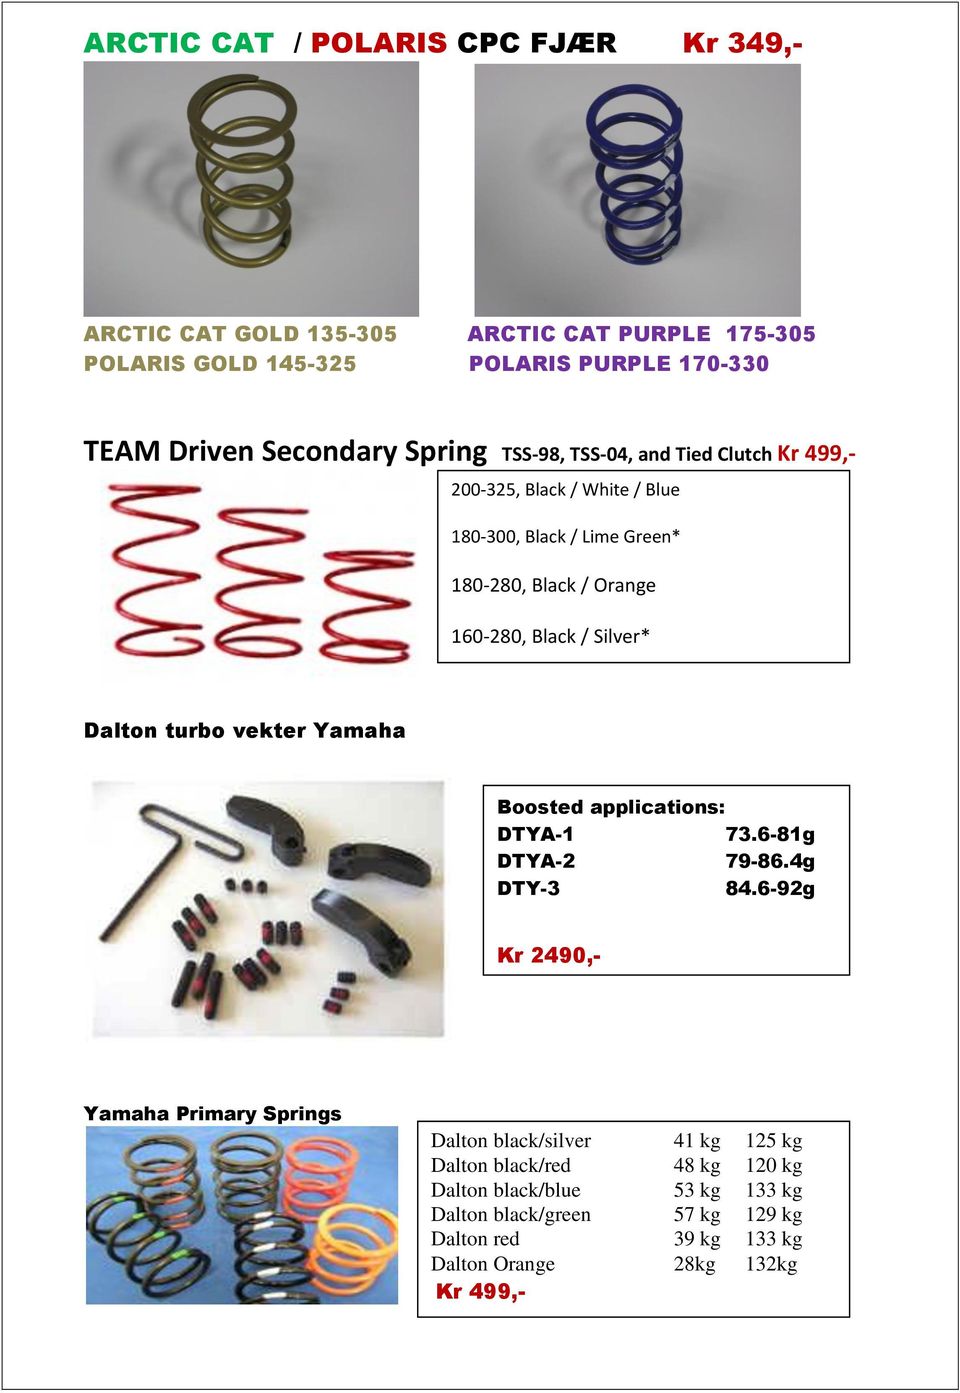 Dalton turbo vekter Yamaha Boosted applications: DTYA-1 73.6-81g DTYA-2 79-86.4g DTY-3 84.